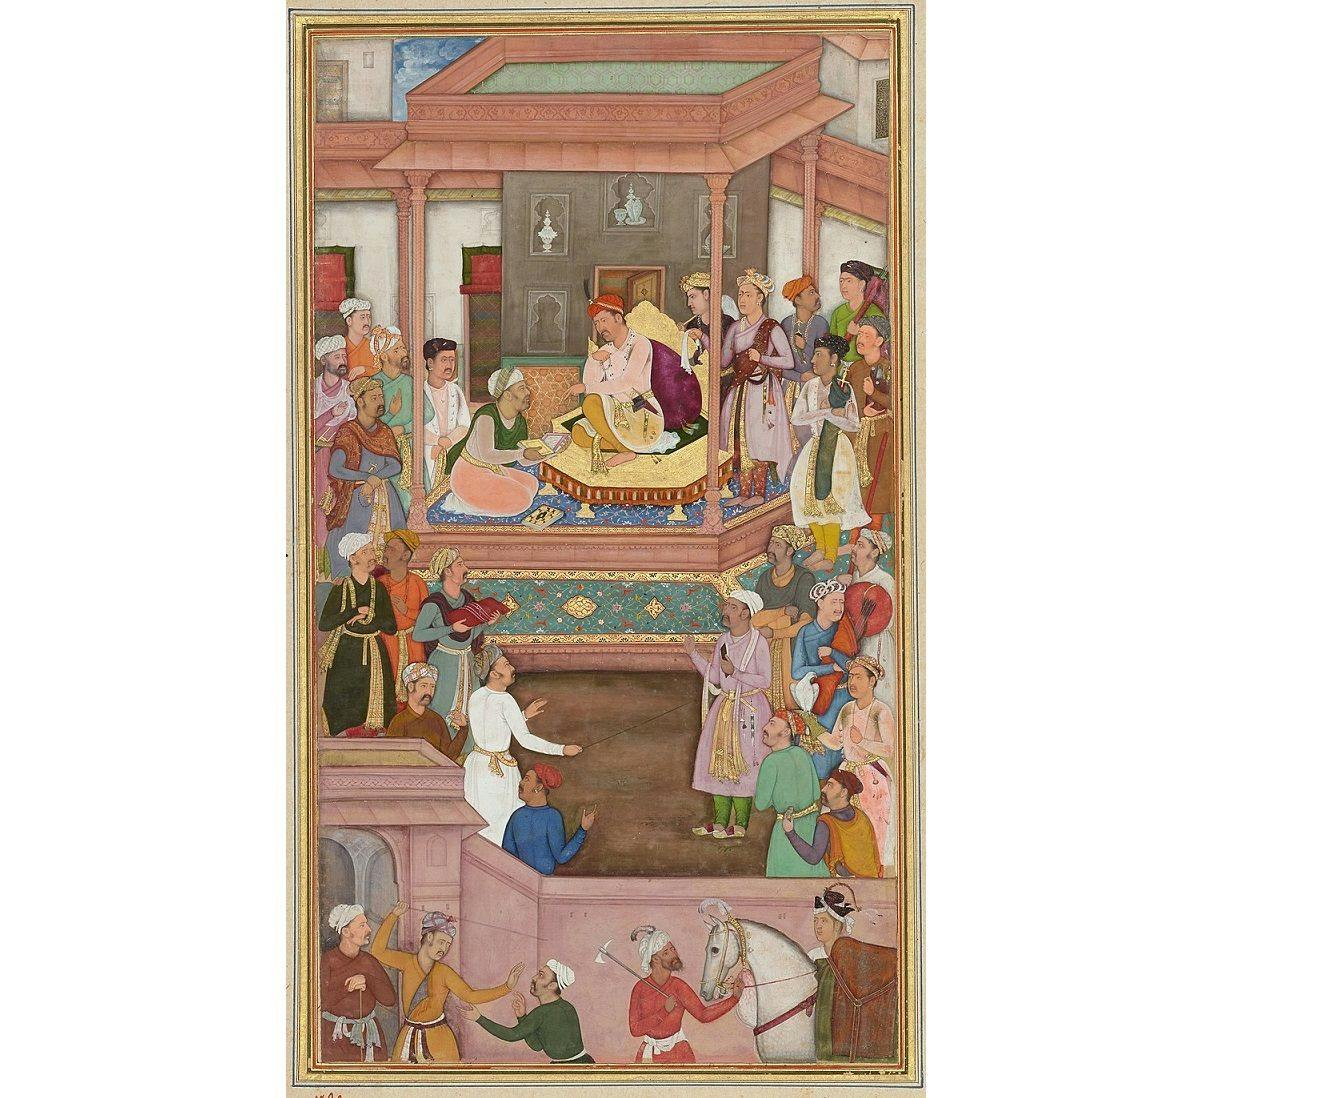 Abul-Fazl ibn Mubarak presents Akbar Nama to the Mughal emperor Akbar.